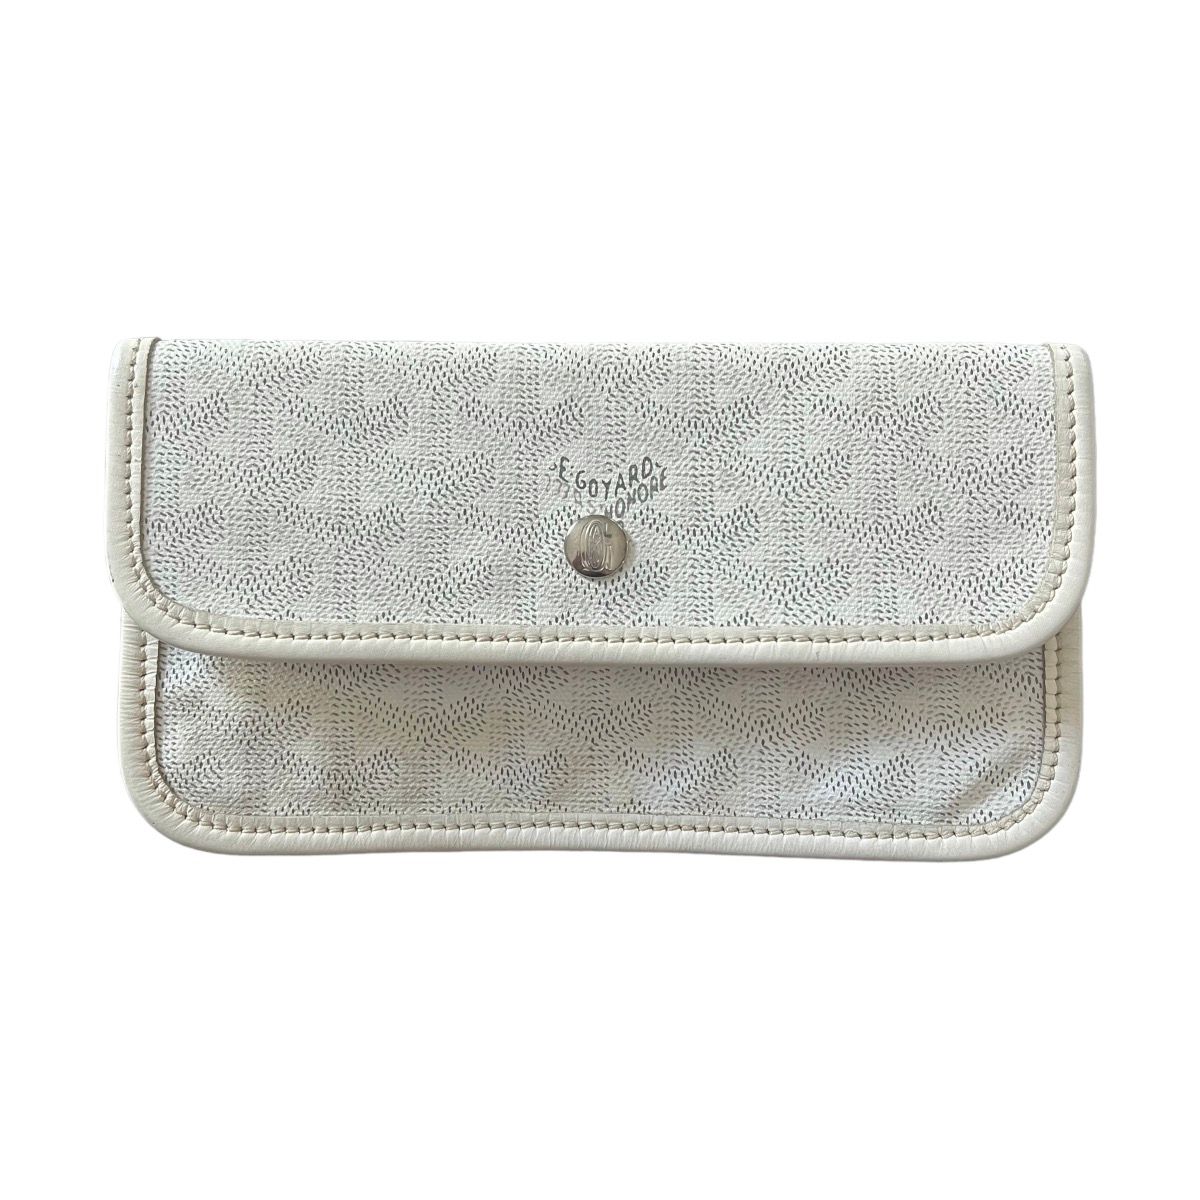 💯Authentic Goyard Wallet Pouch  Goyard wallet, Goyard bag, Wallet pouch